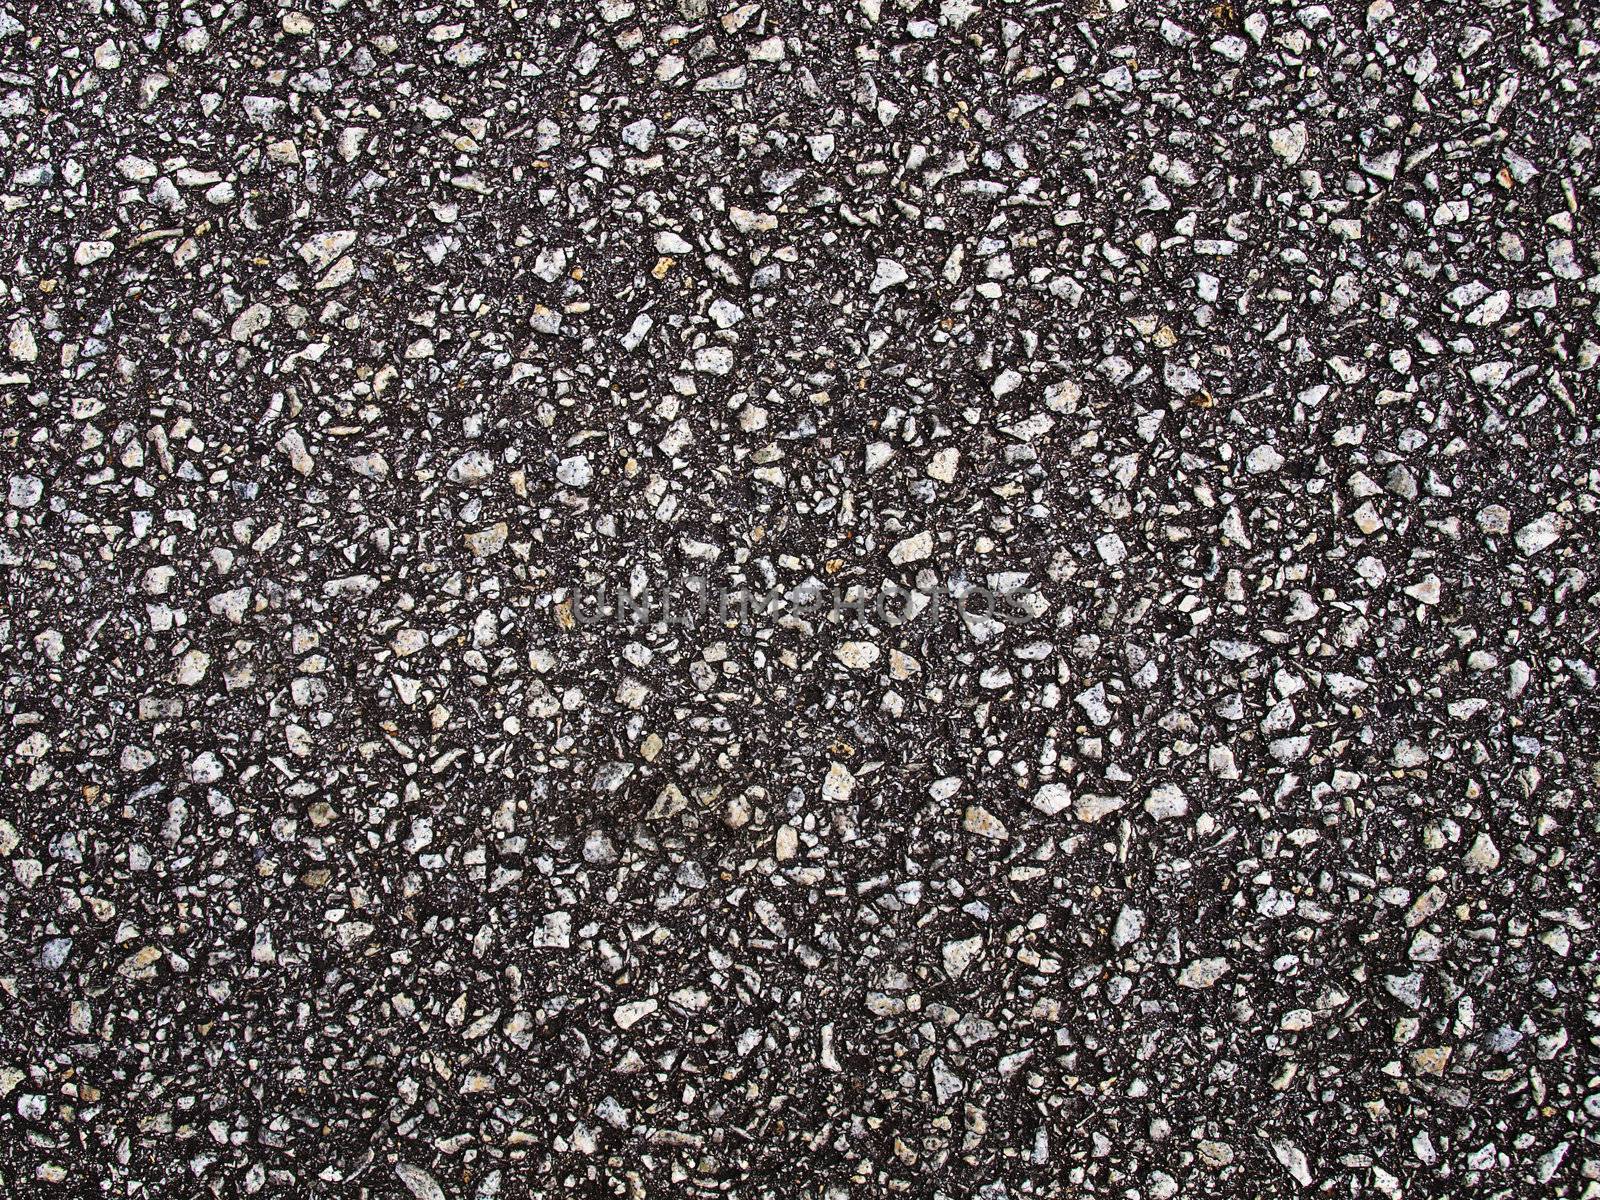 close up of asphalt texture background